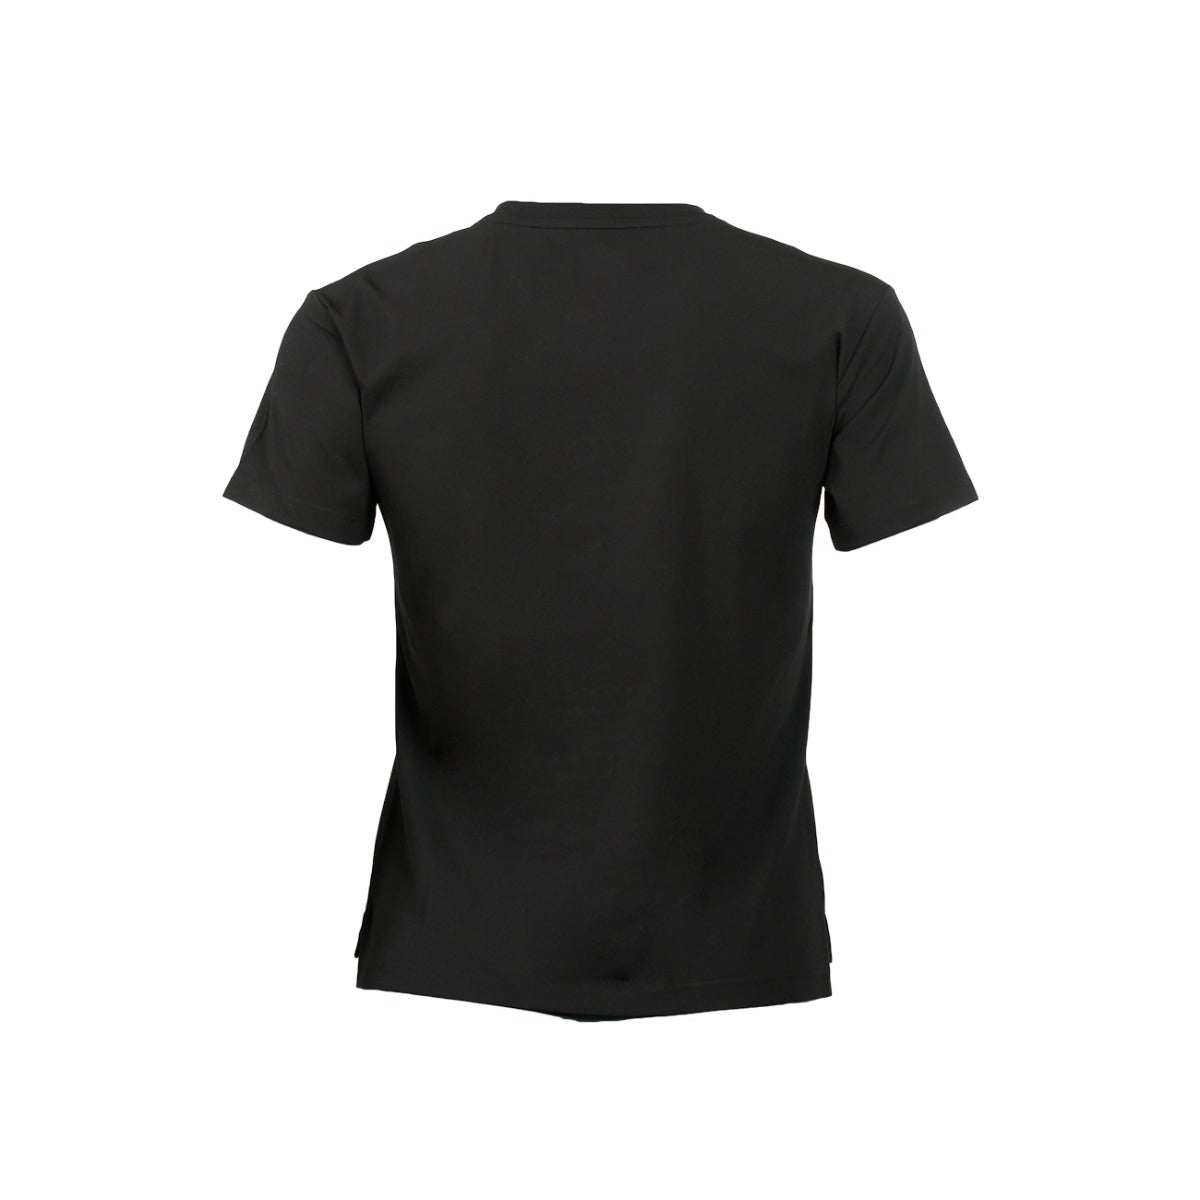 Anta SS Tee Cotton T-Shirt For Women, Black